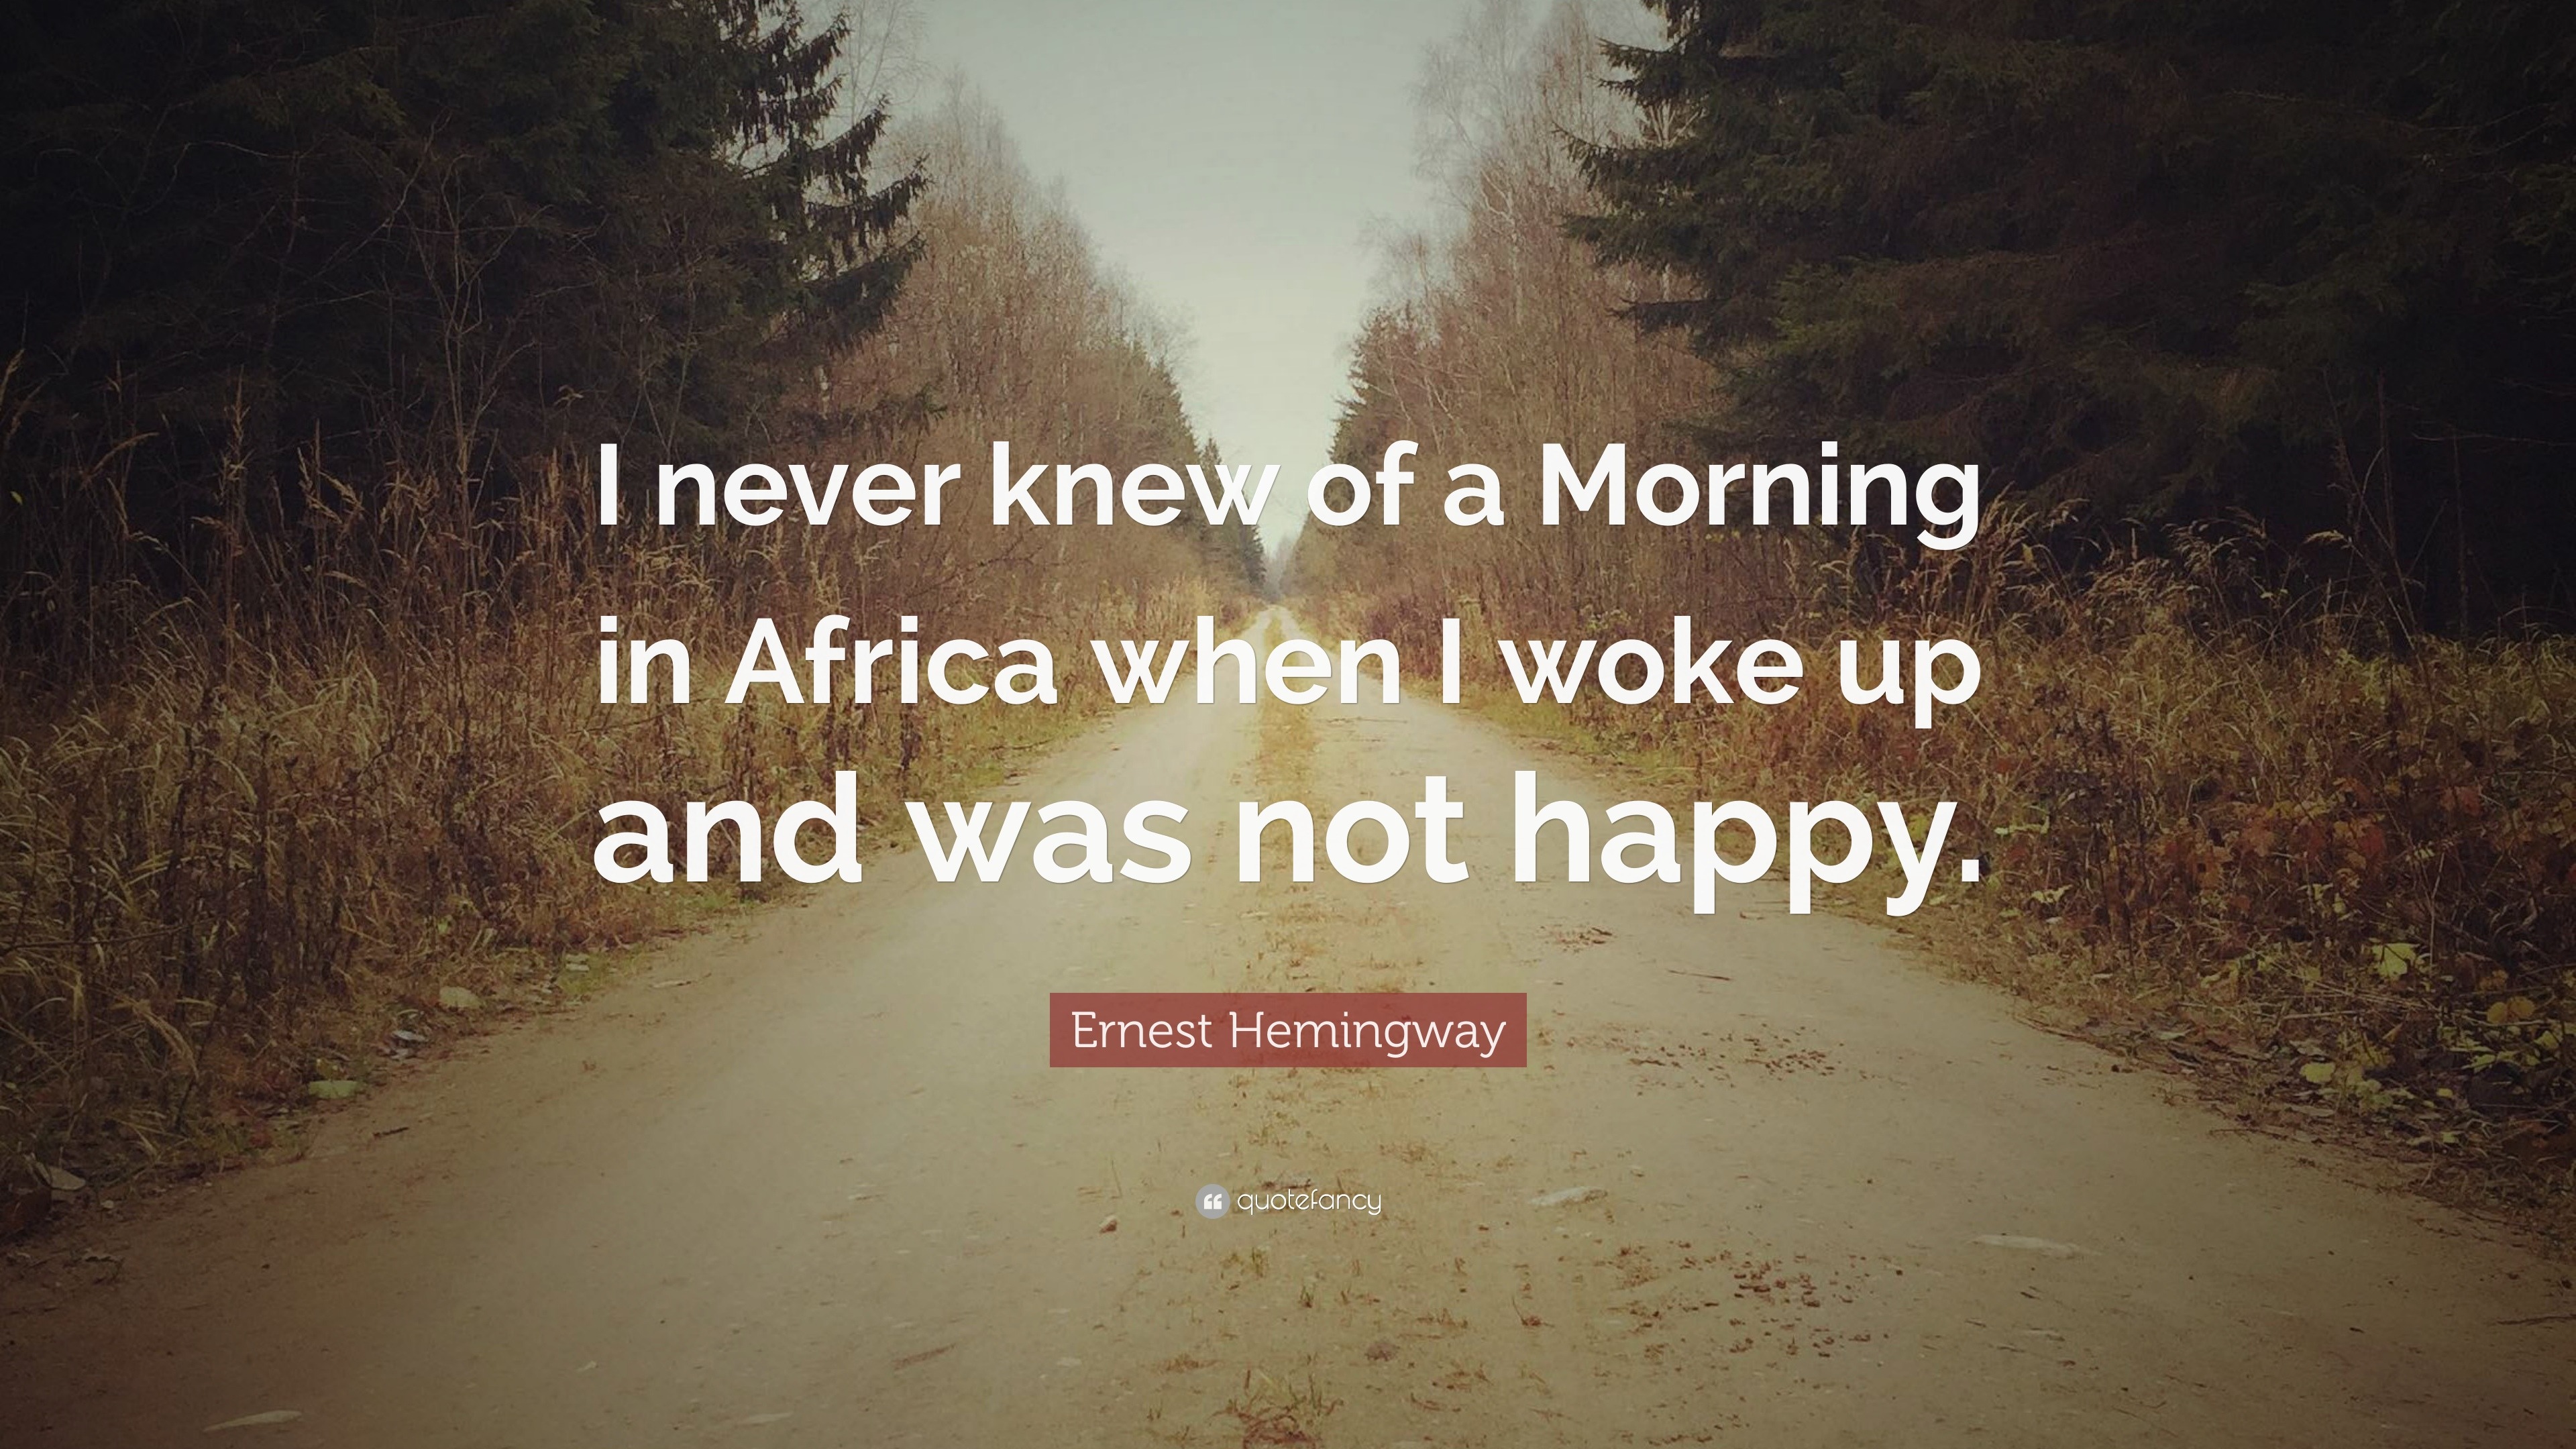 Ernest Hemingway Quote: 